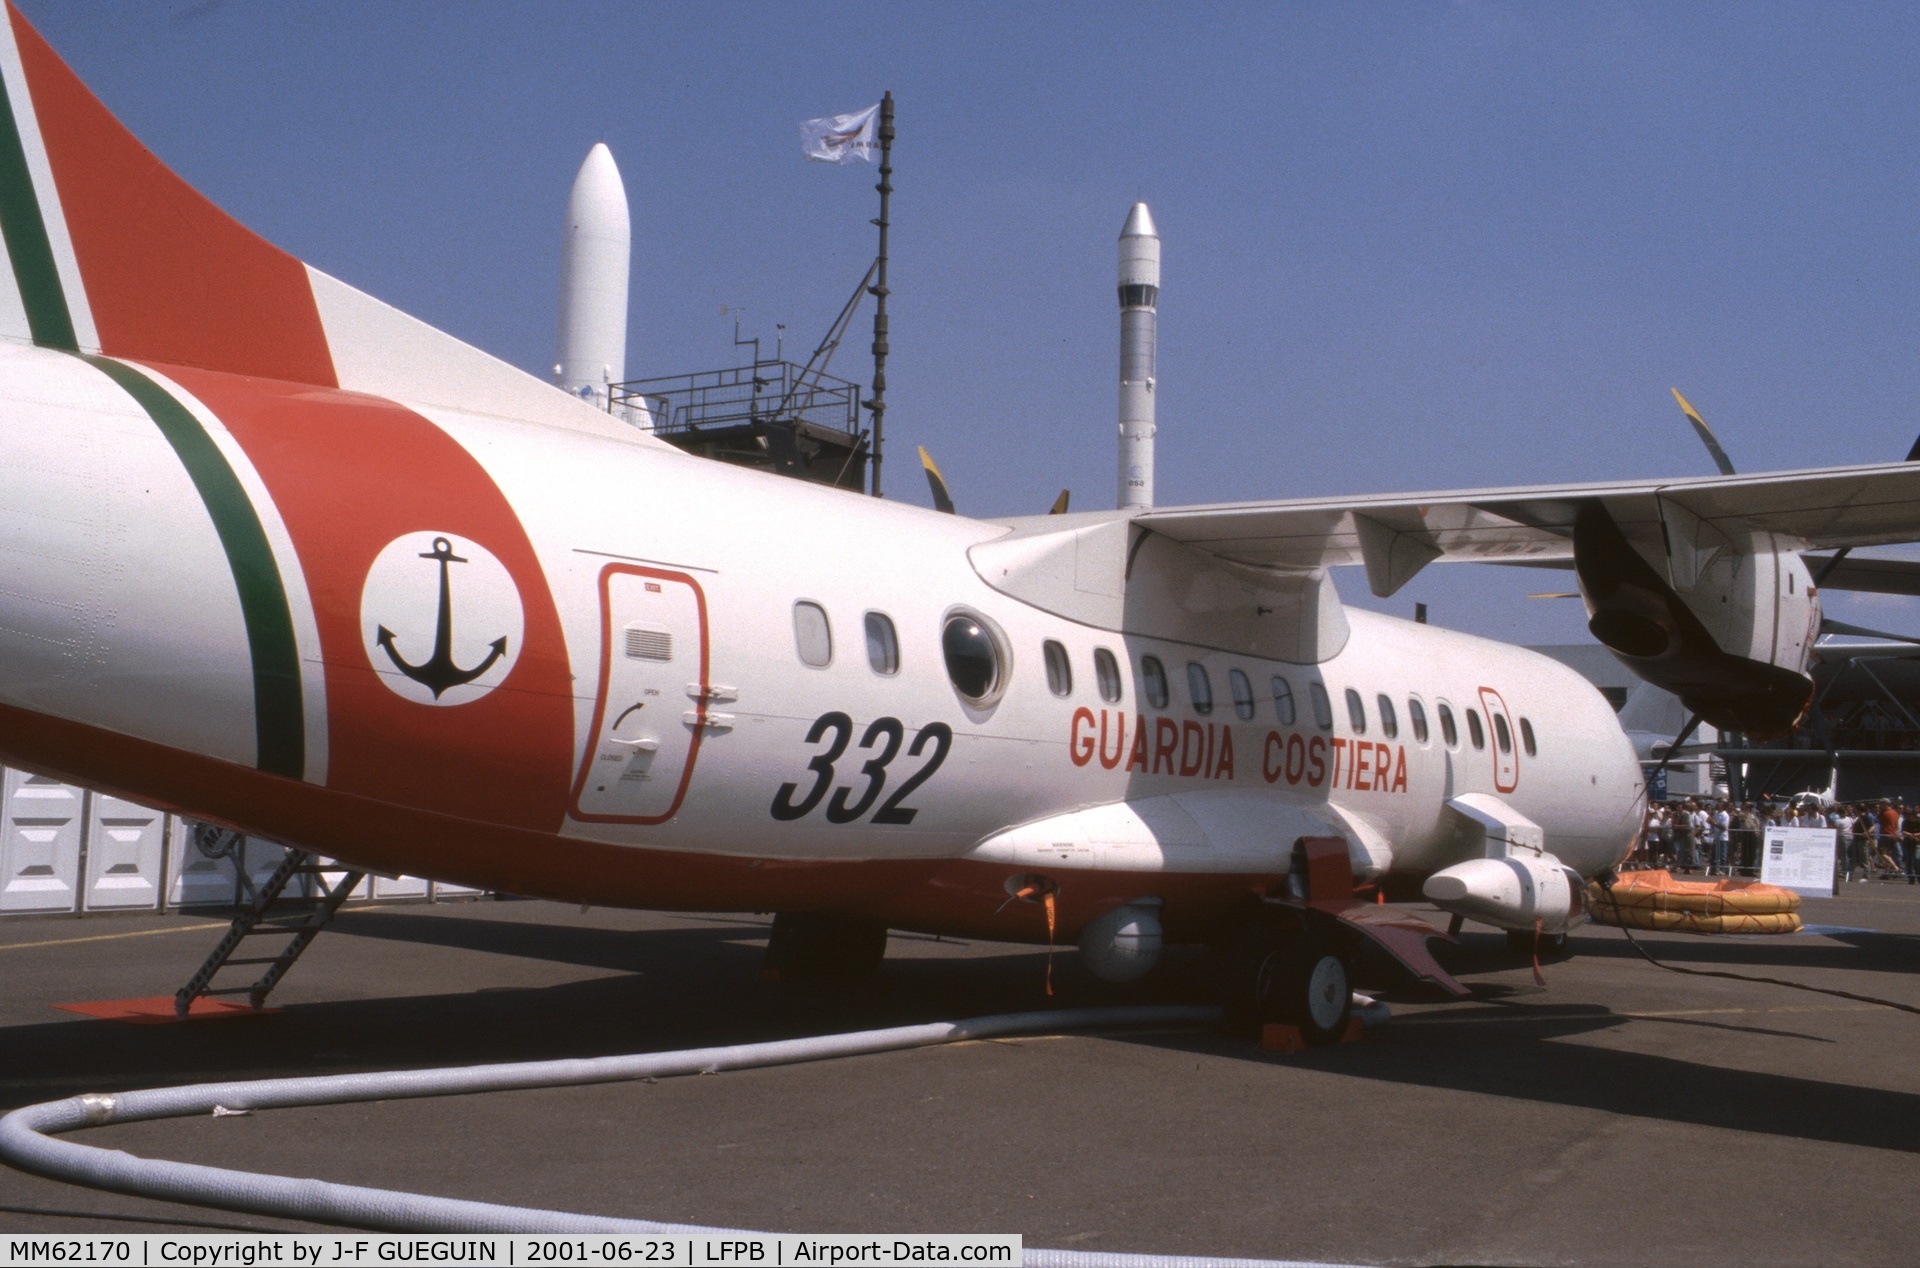 MM62170, 1995 ATR 42-420MP C/N 466, On display at 2001 Paris-Le Bourget airshow.